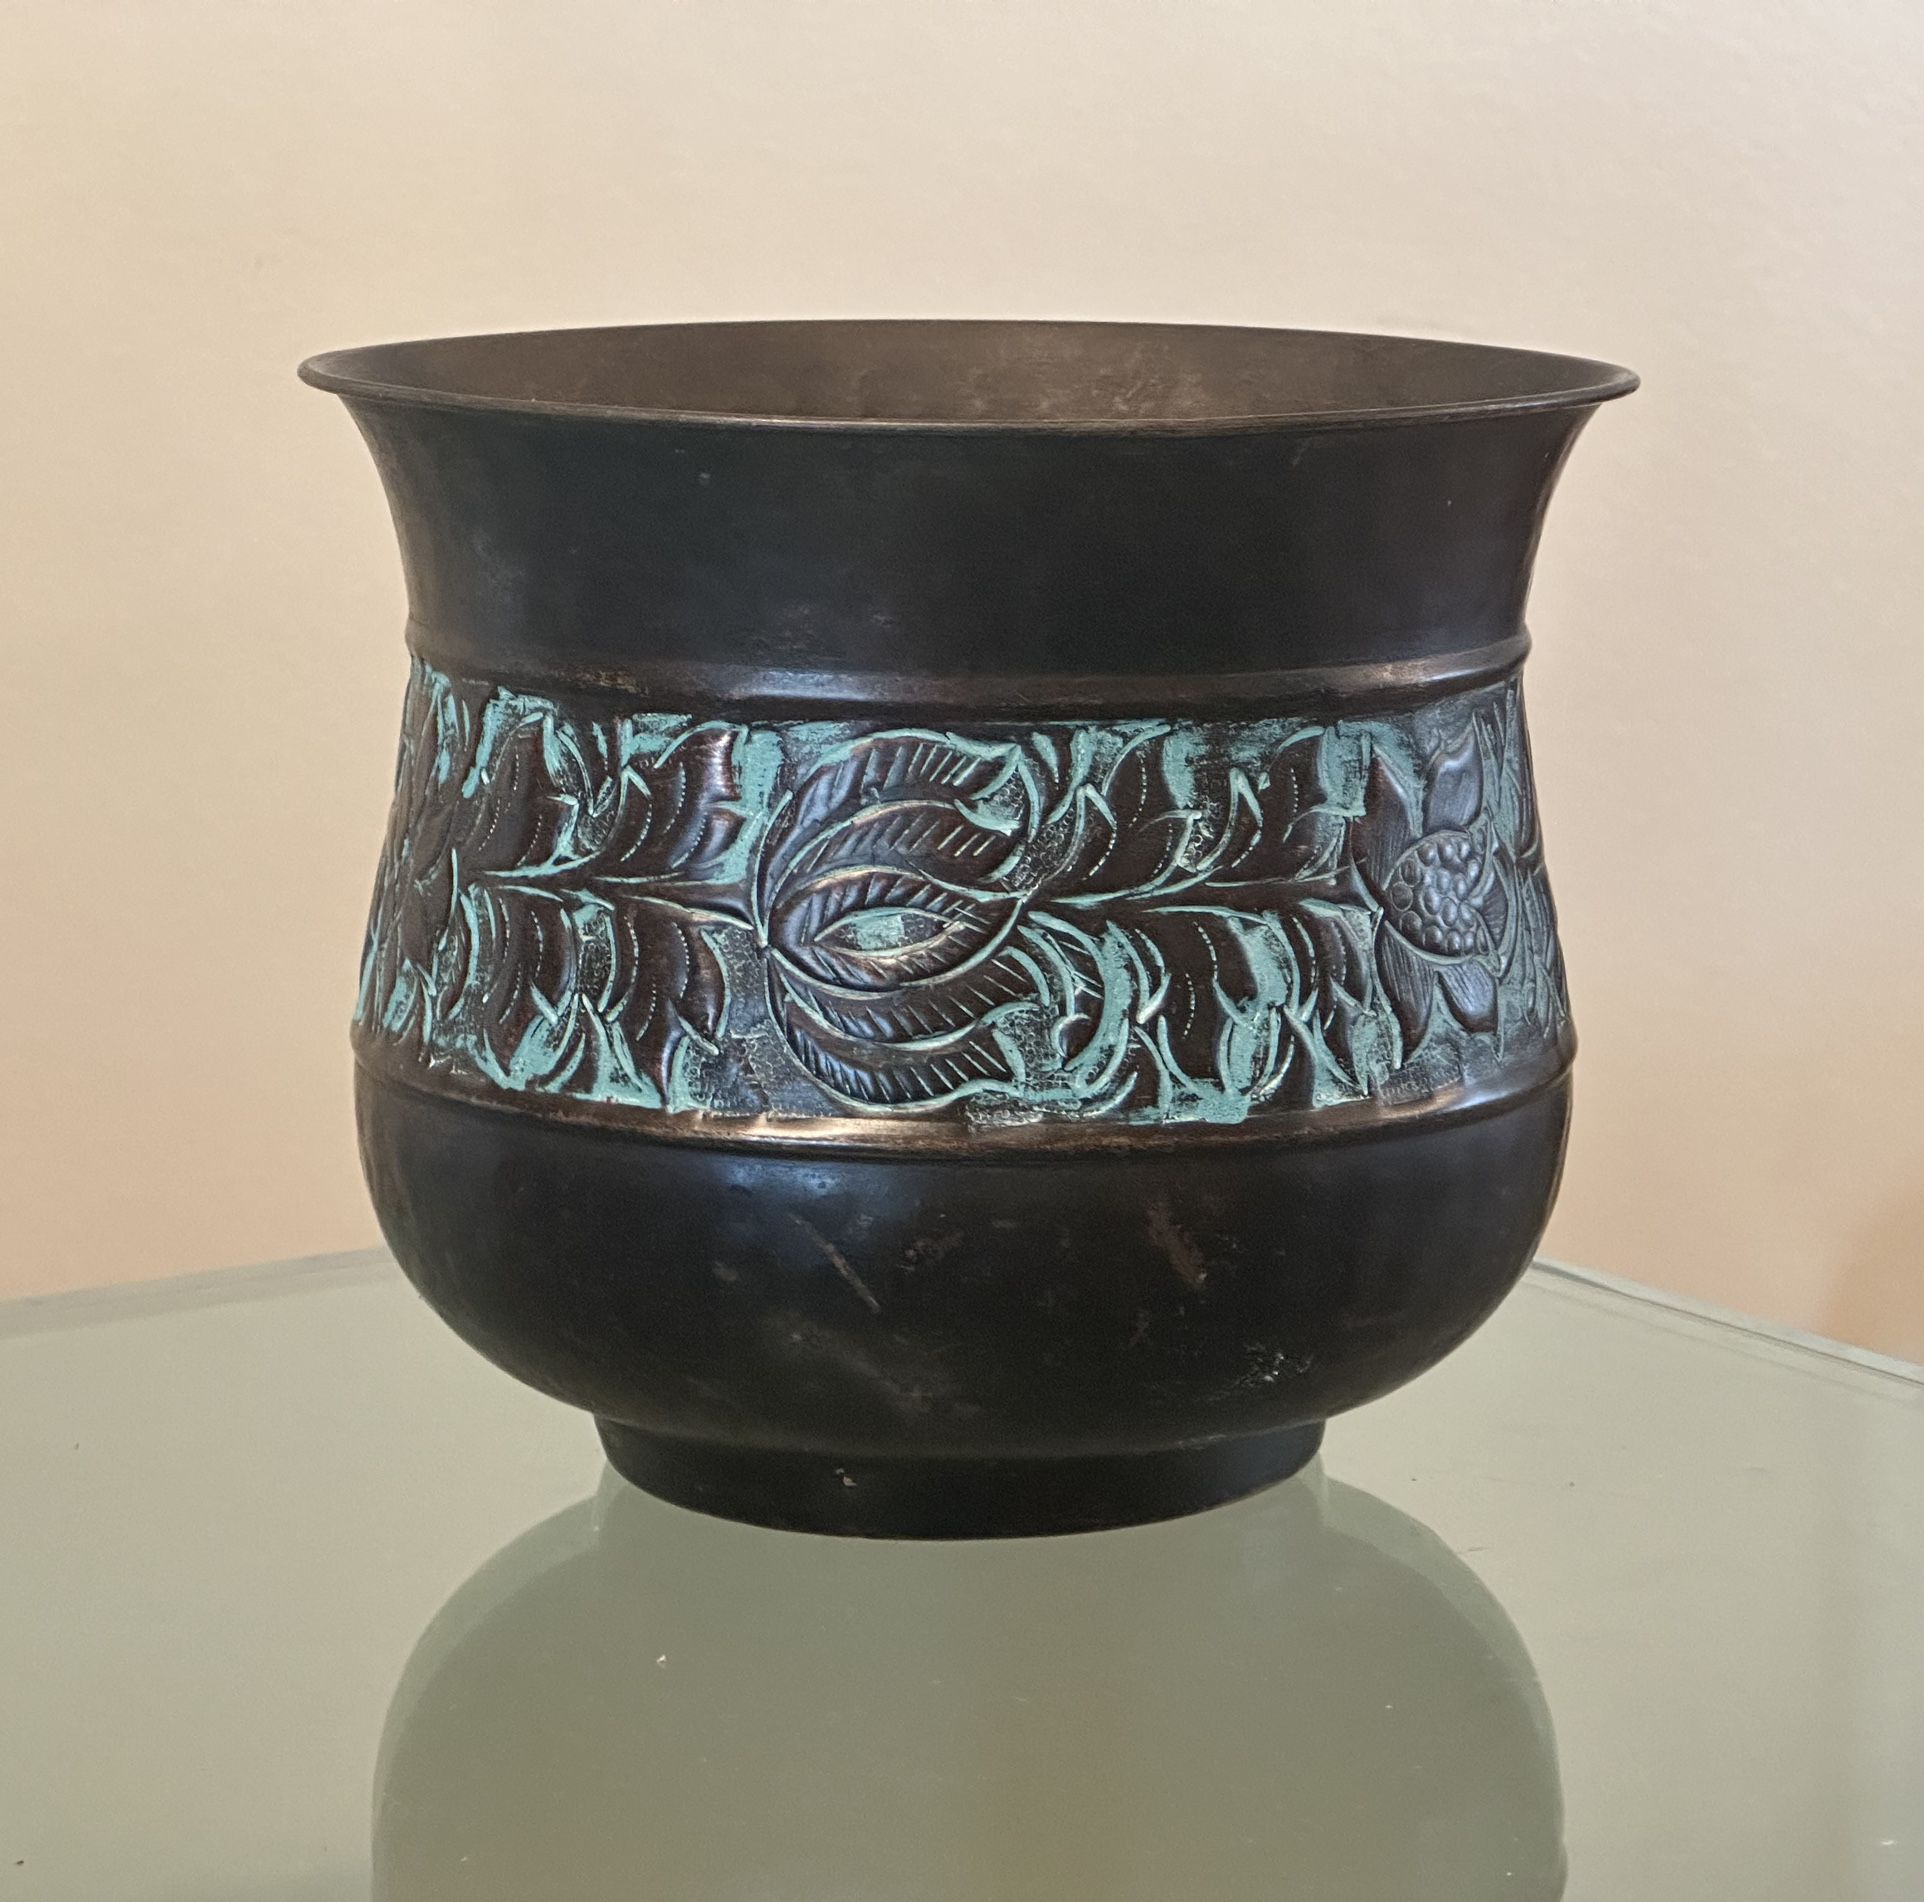 Stunning Dark Oil Rubbed Bronze Metal Hammered Copper Look Flower Motif Small Plant Holder Planter Vase Pot